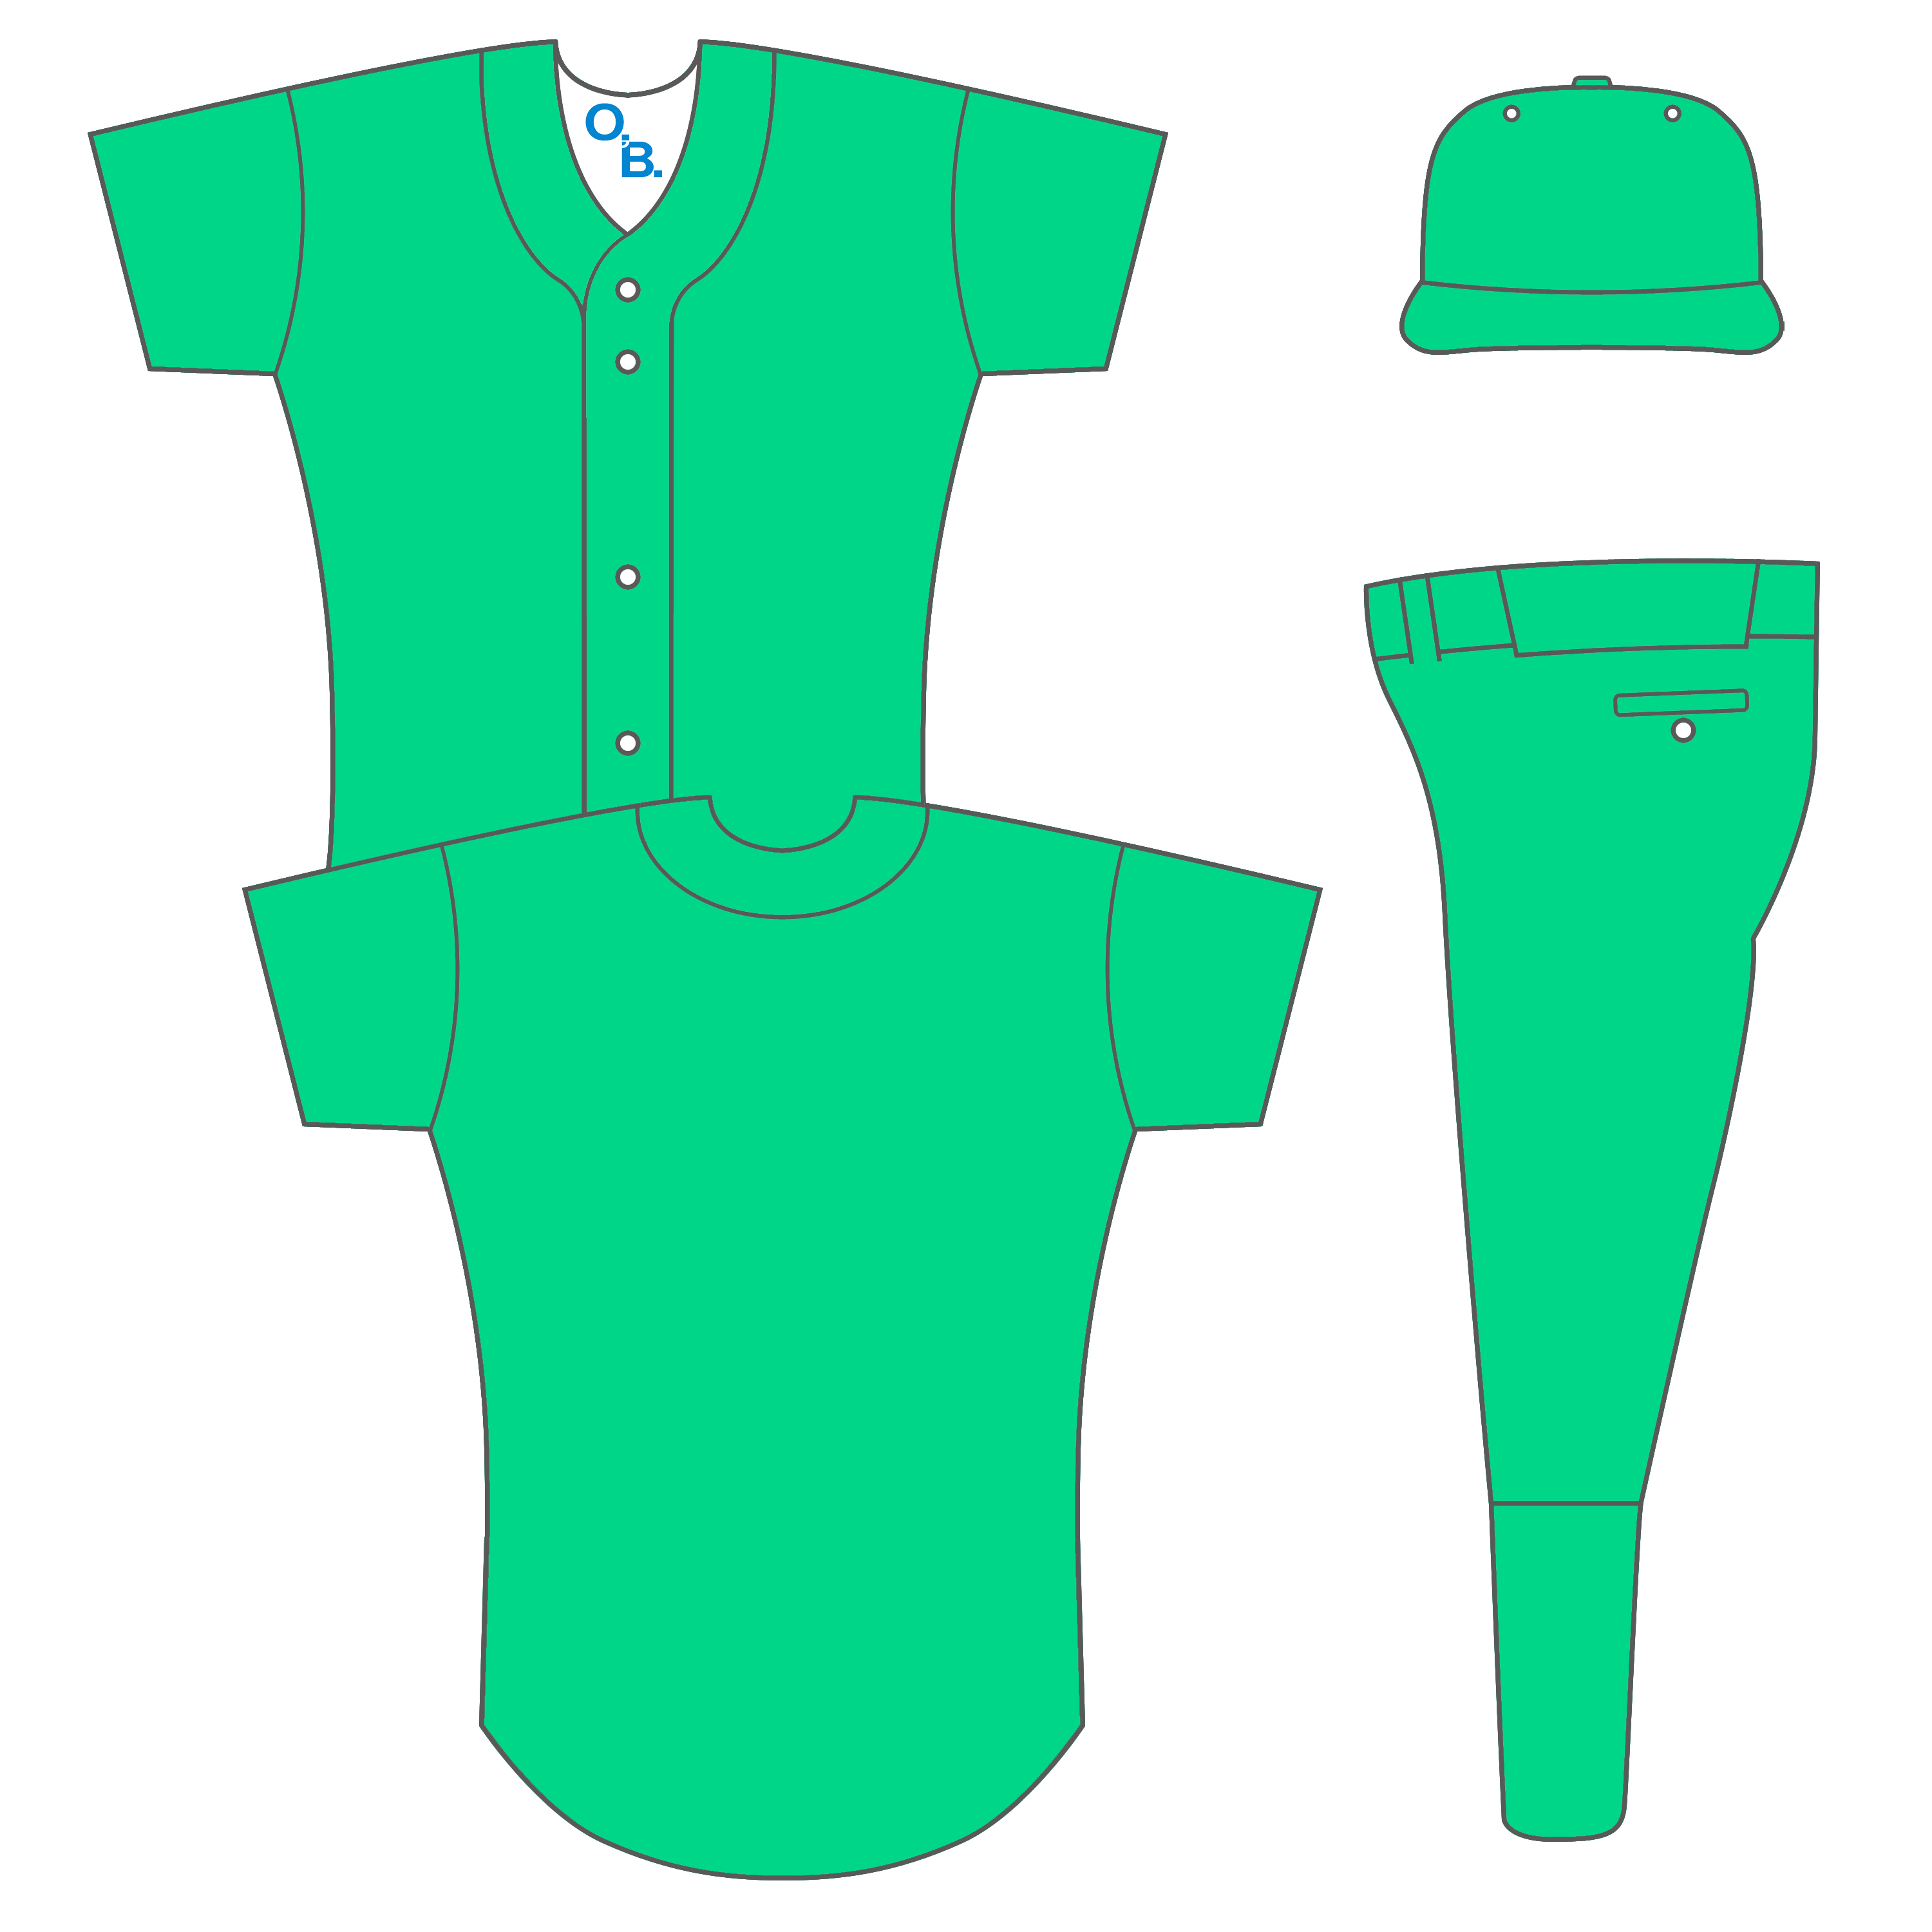 Baseball Uniform Template 1 by TimeOBrien on DeviantArt